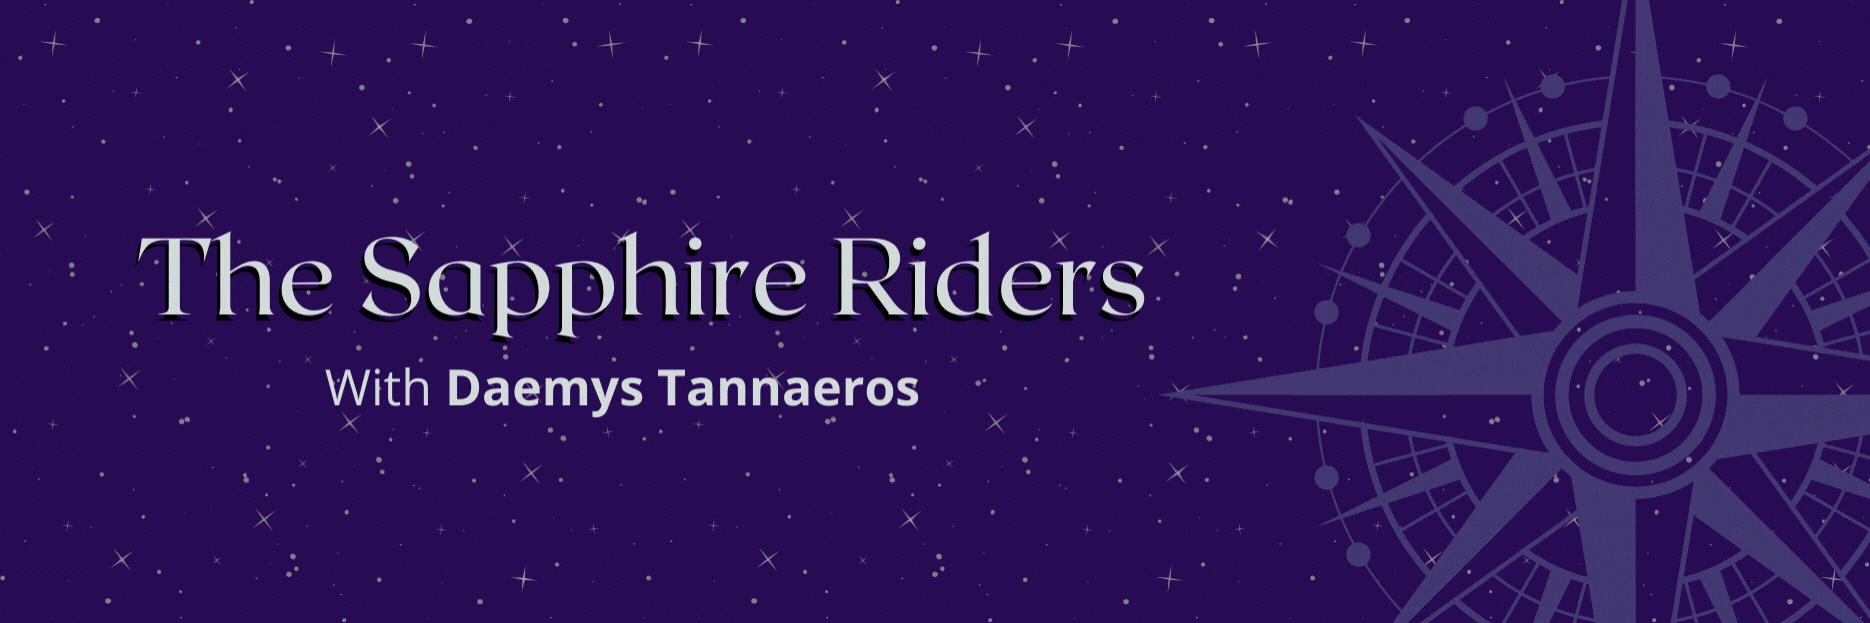 The Sapphire Riders #2